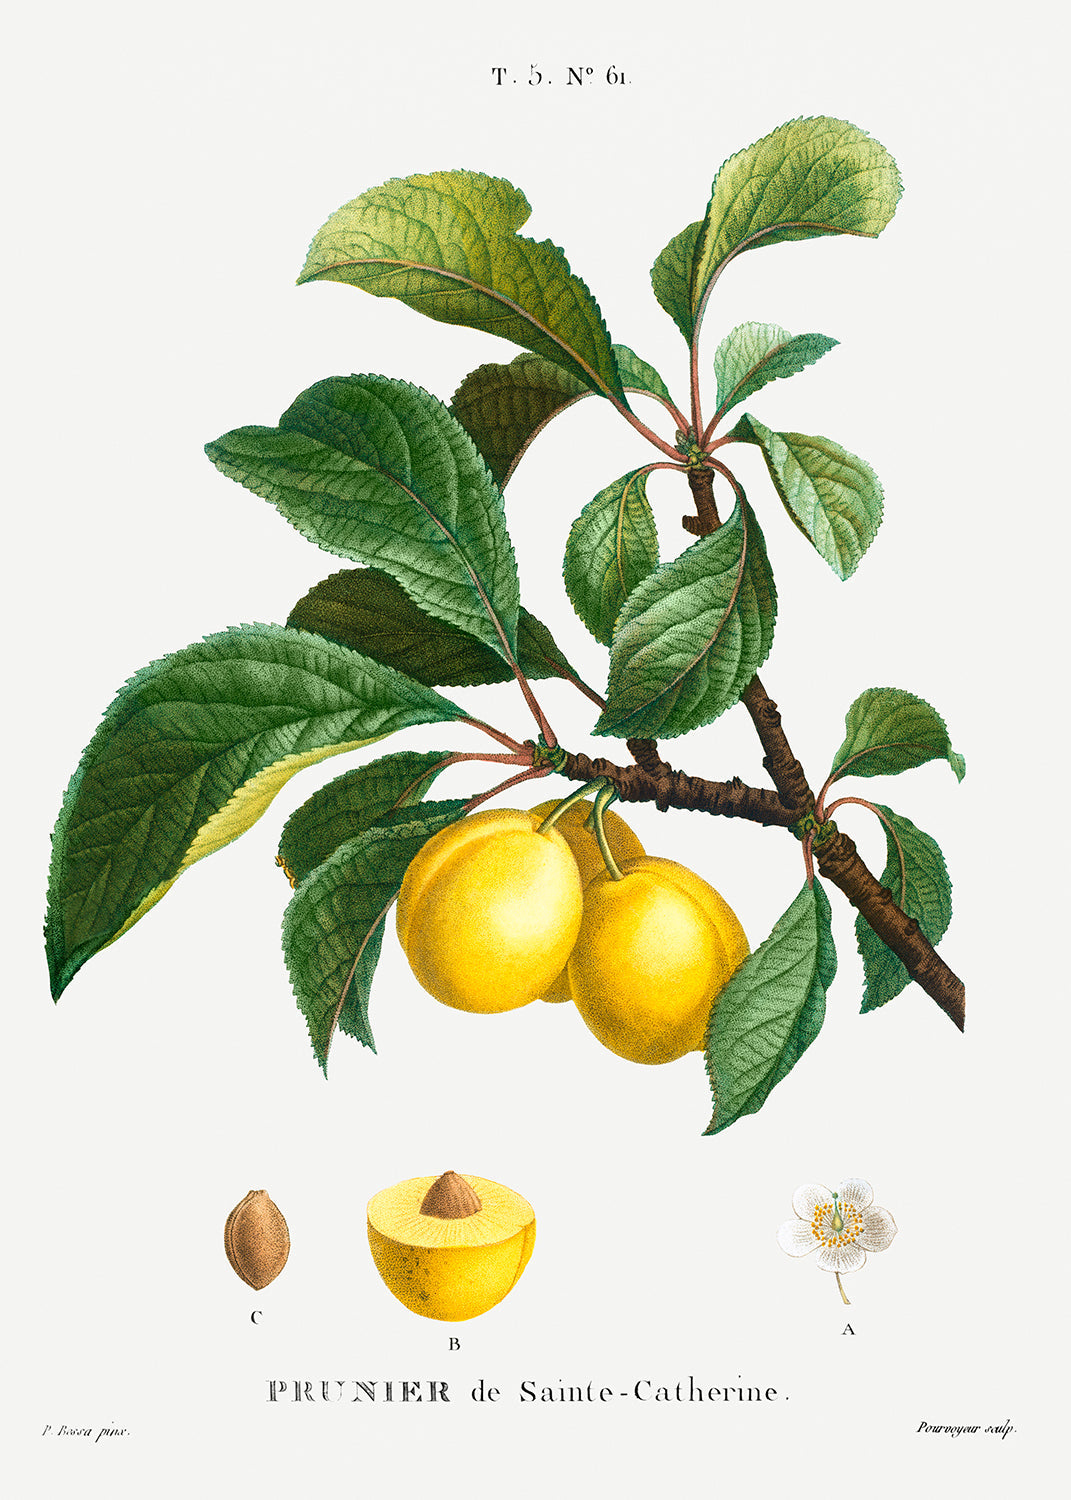 Botanical Plant Print - Plum (Prunier de Sainte-Catherine) by Pierre Joseph Redoute